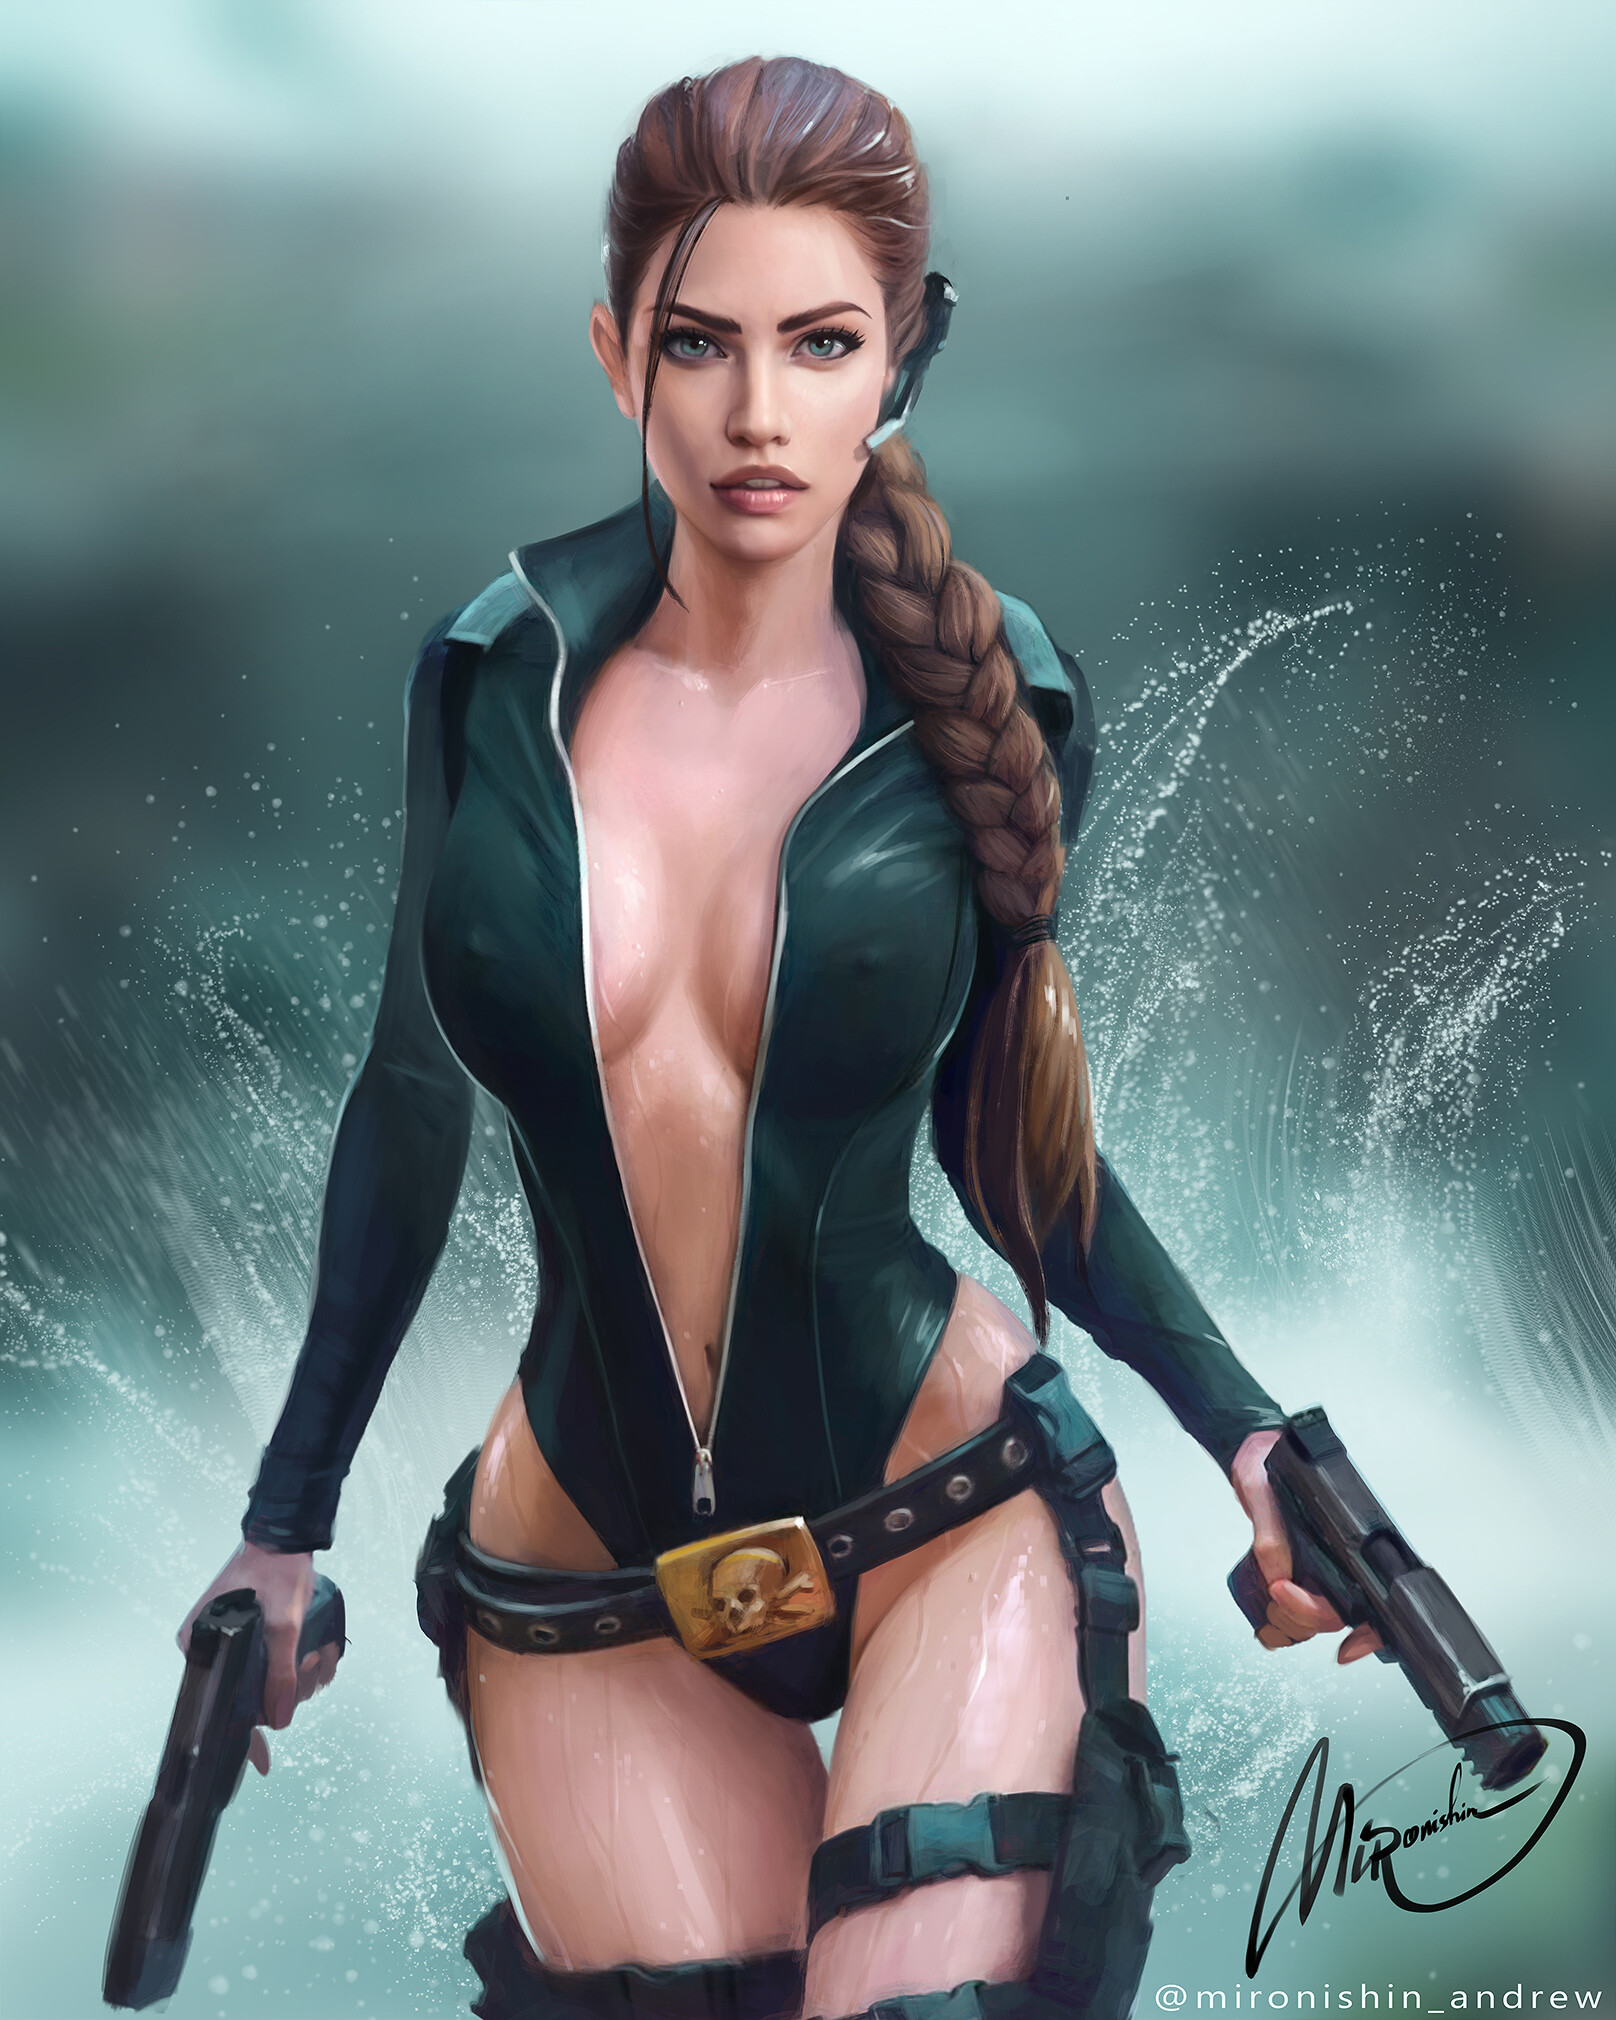 General 1616x2020 Tomb Raider video game art fan art Mironishin Story Lara Croft (Tomb Raider) video games video game characters girls with guns brunette gun weapon nipple bulge braids